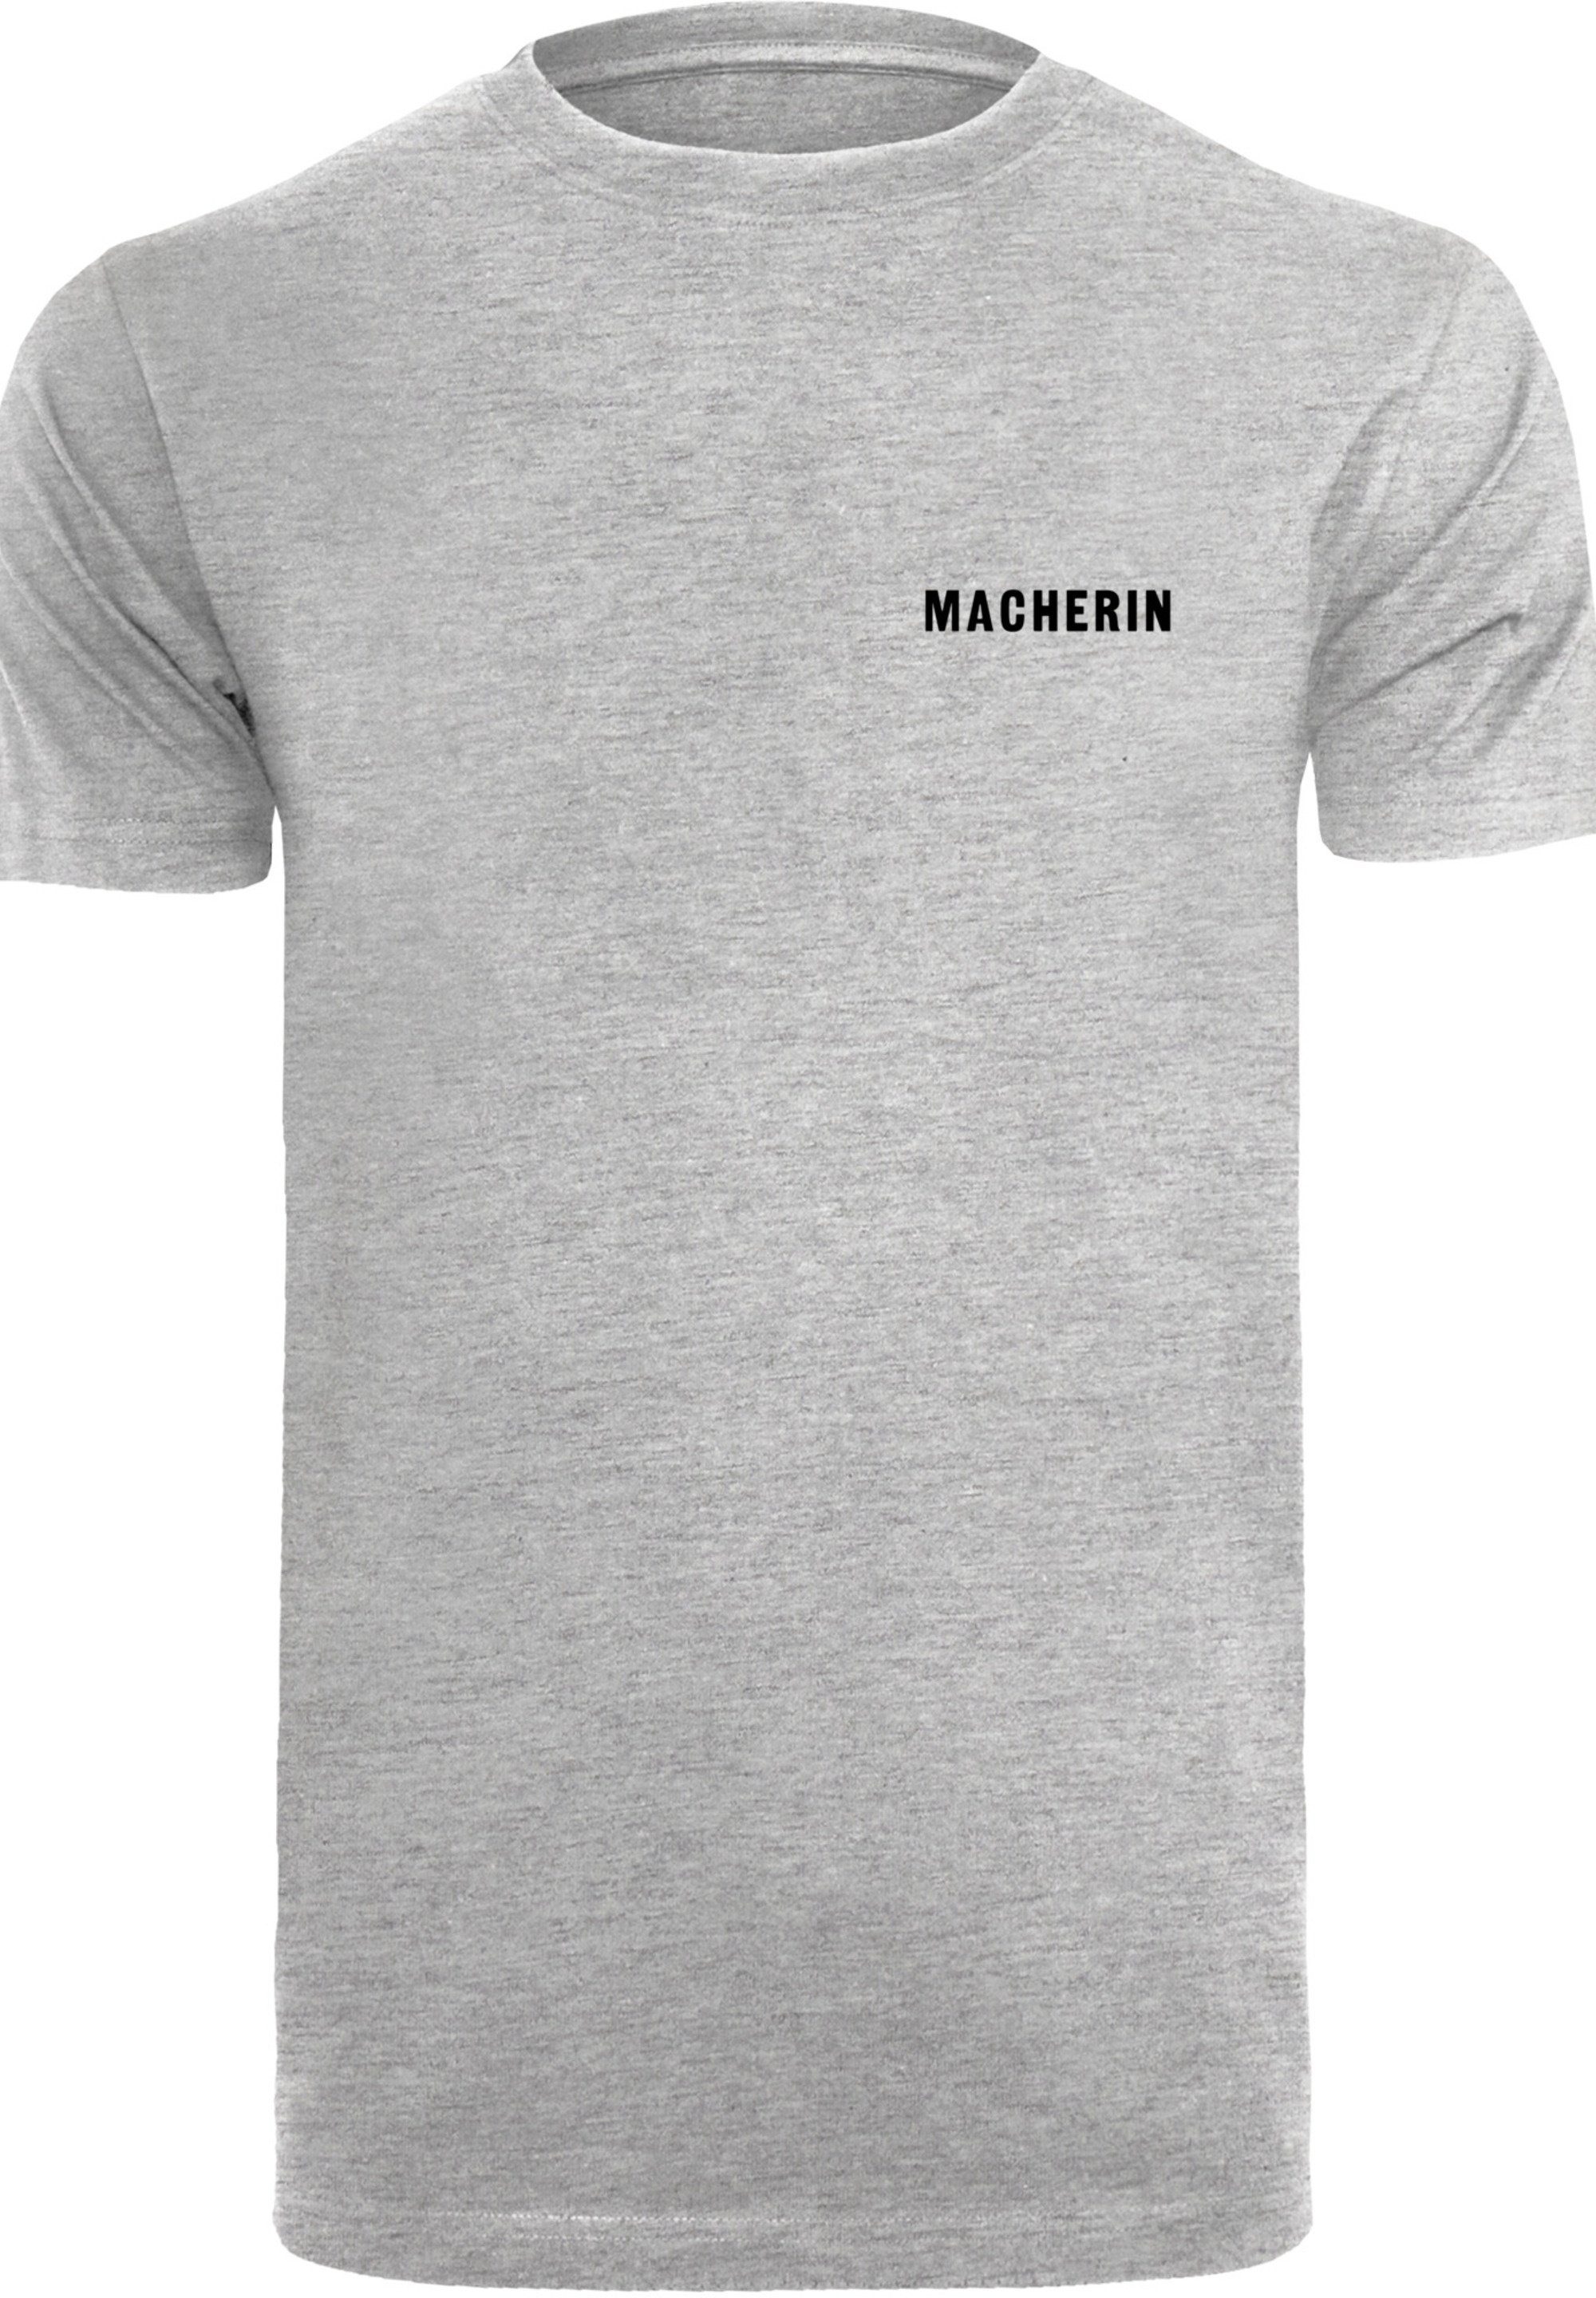 Jugendwort Macherin 2022, F4NT4STIC heather grey slang T-Shirt